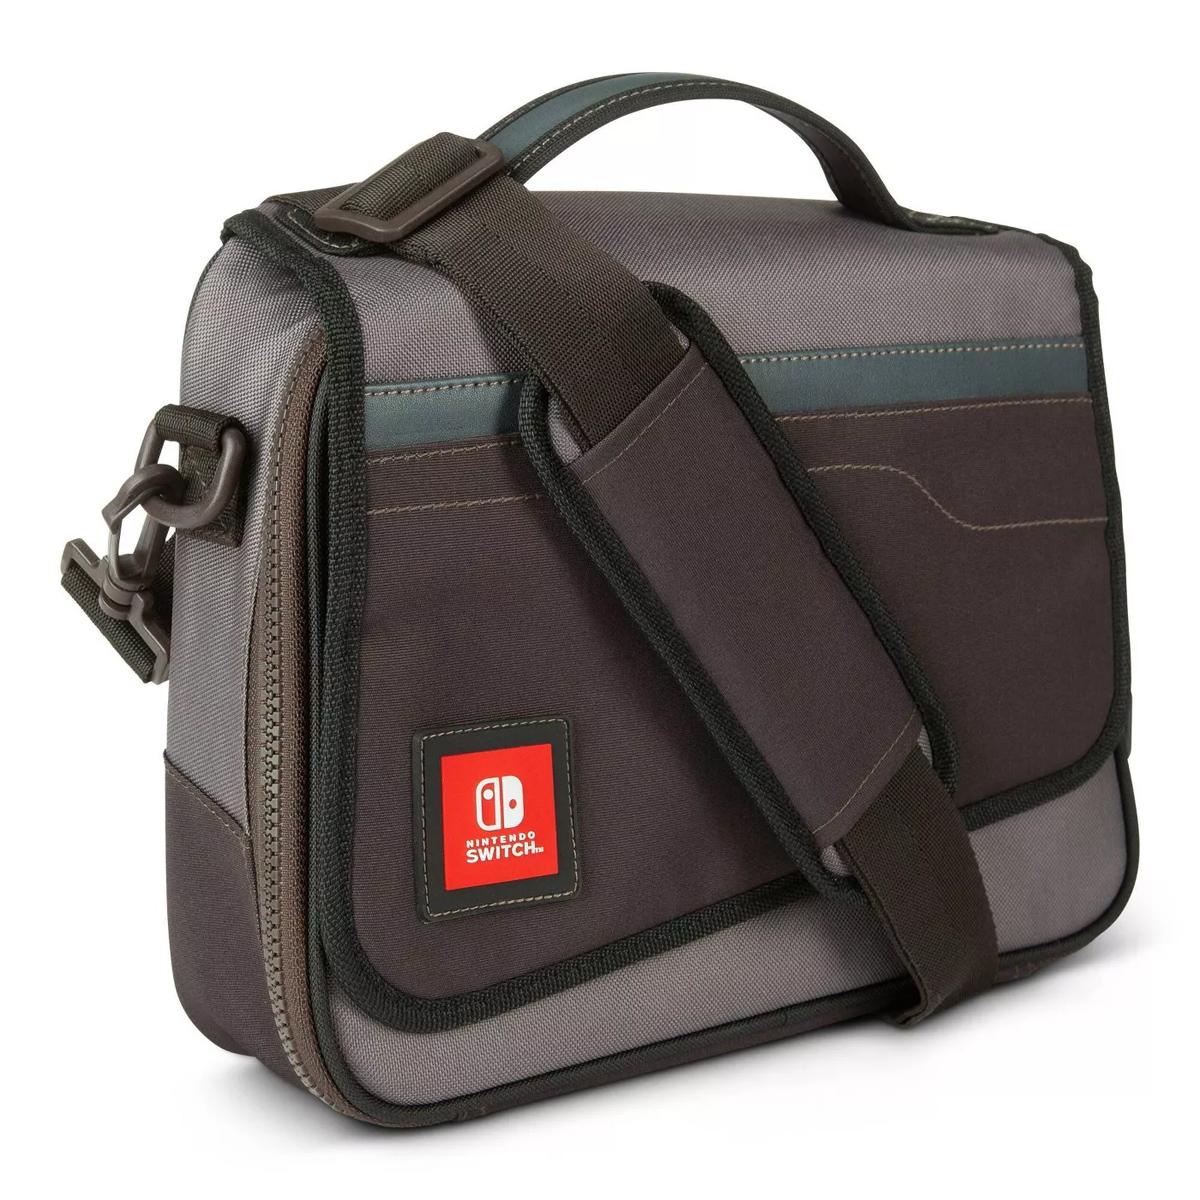 PowerA Transporter Bag for Nintendo Switch for $15.74